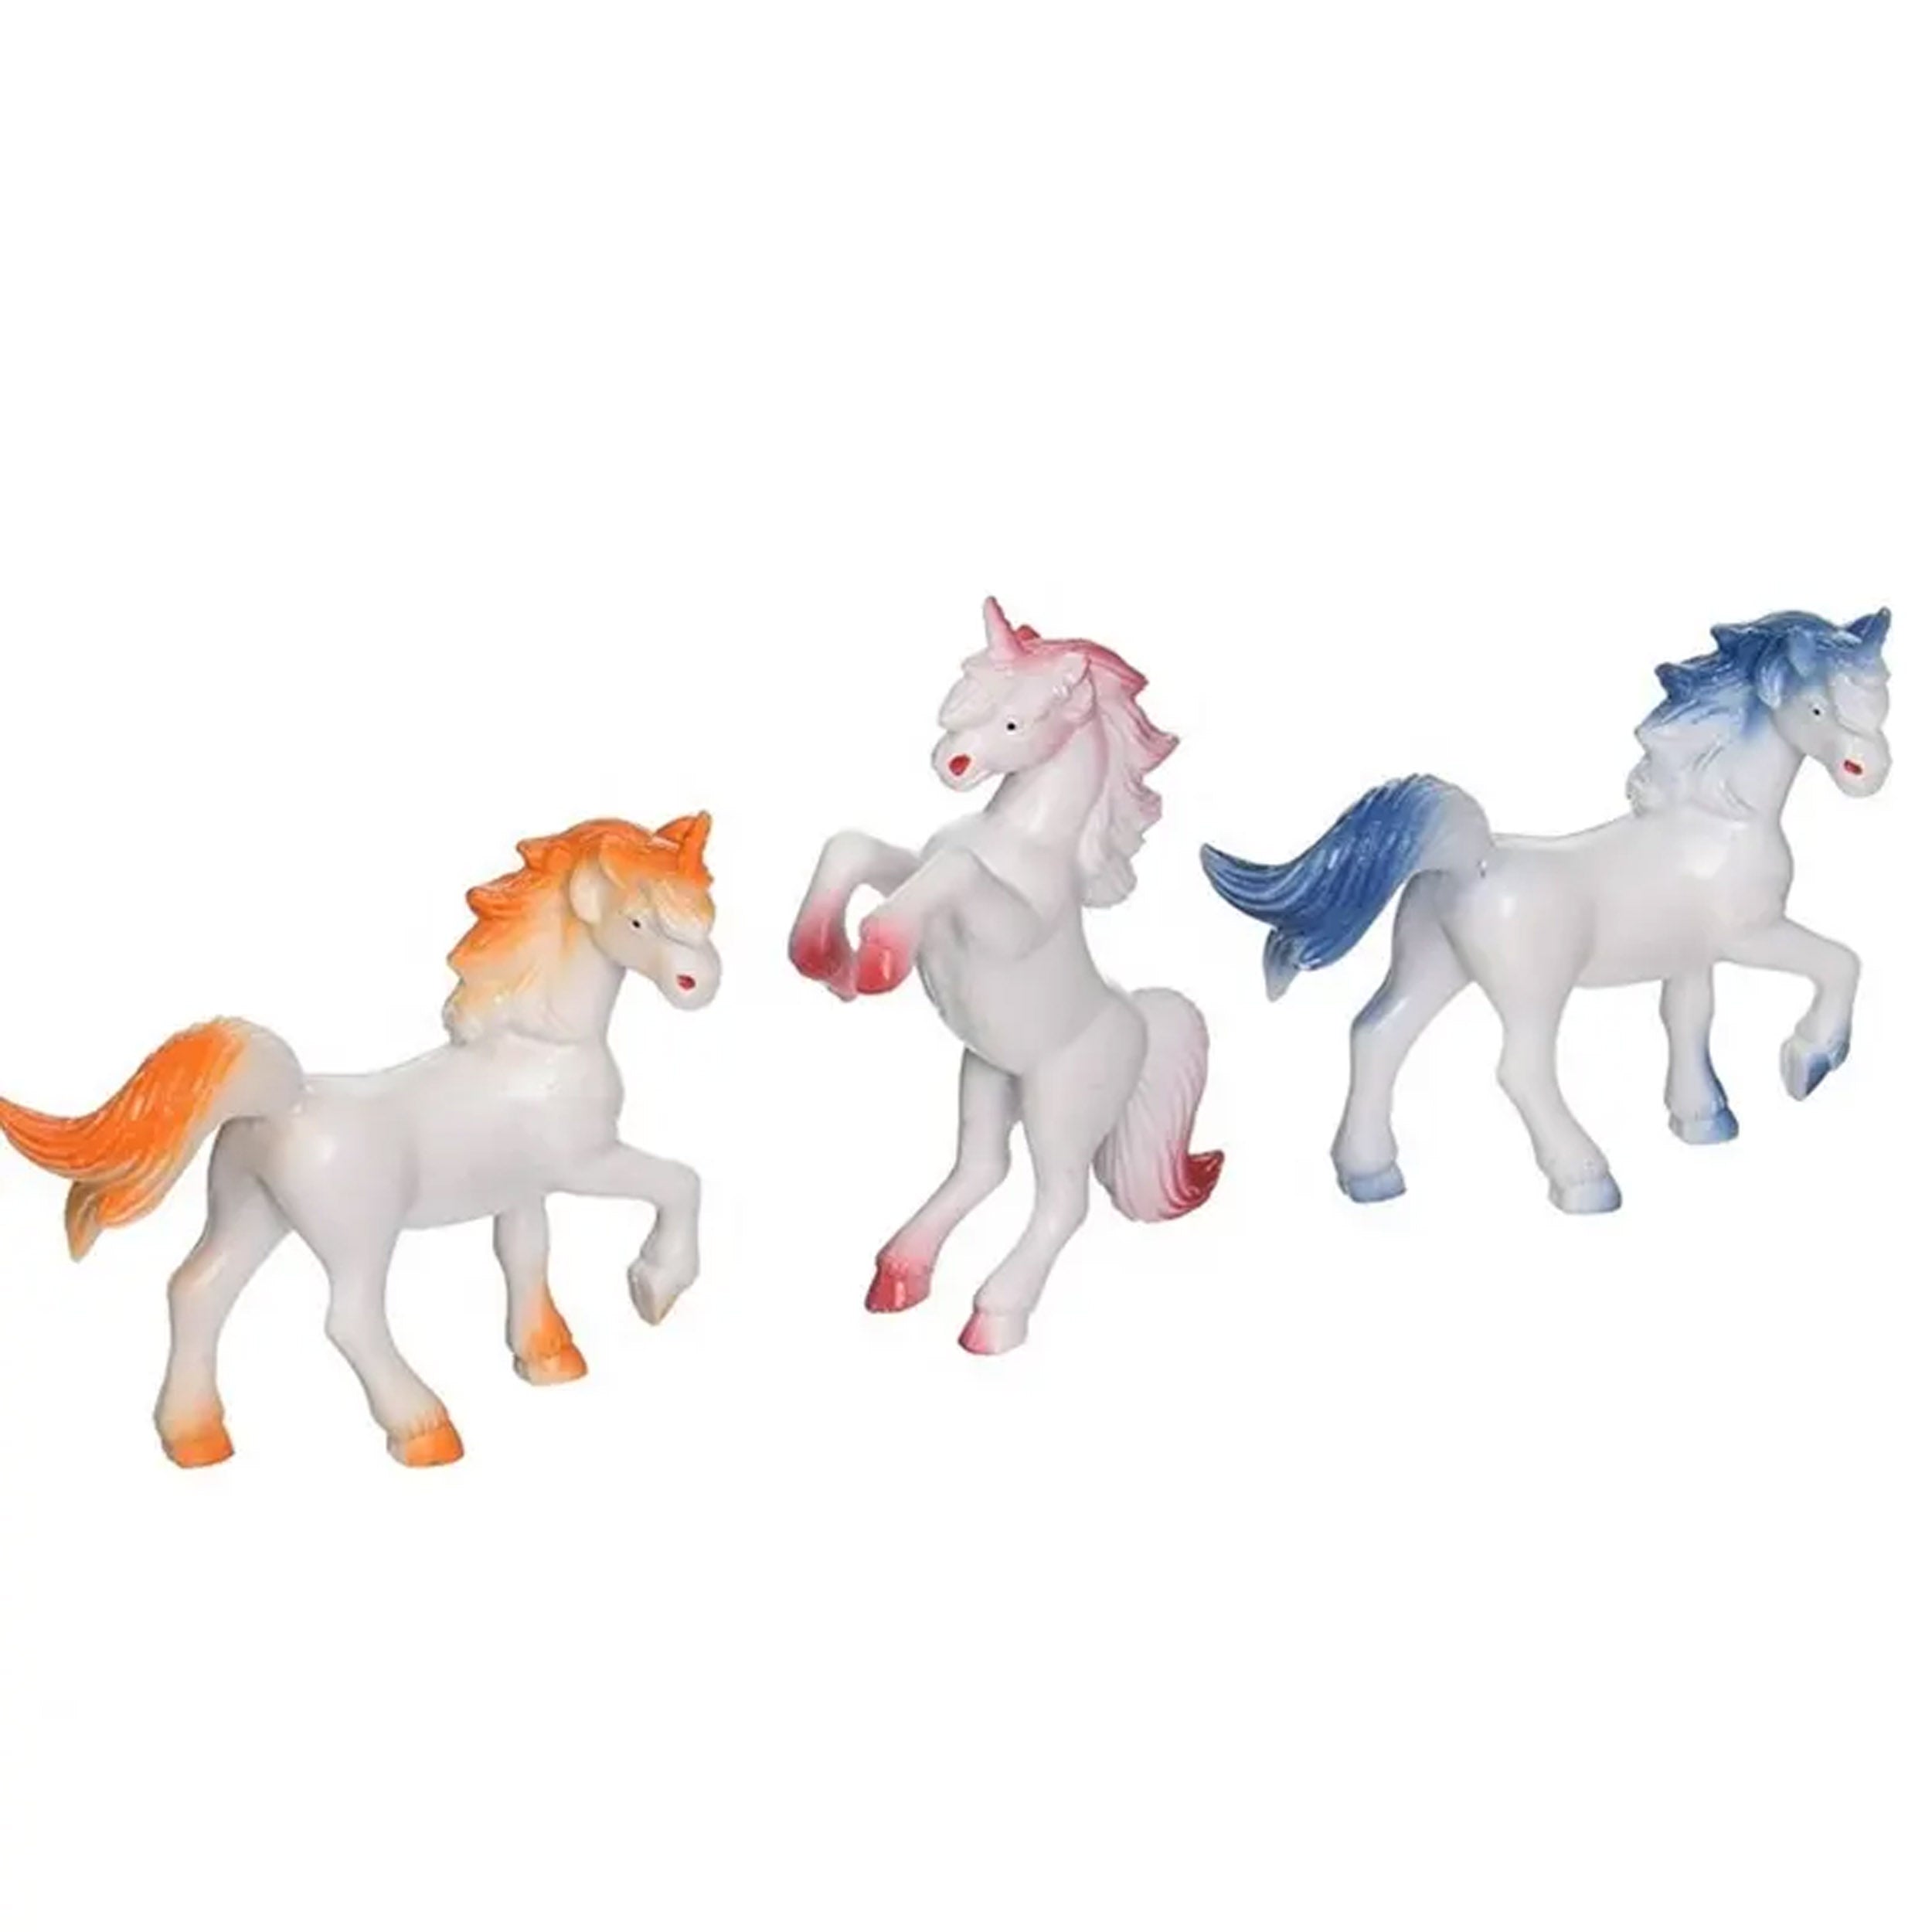 Unicorn Animals Toy for Kids | Fun and Imaginative Playtime MOQ - 12